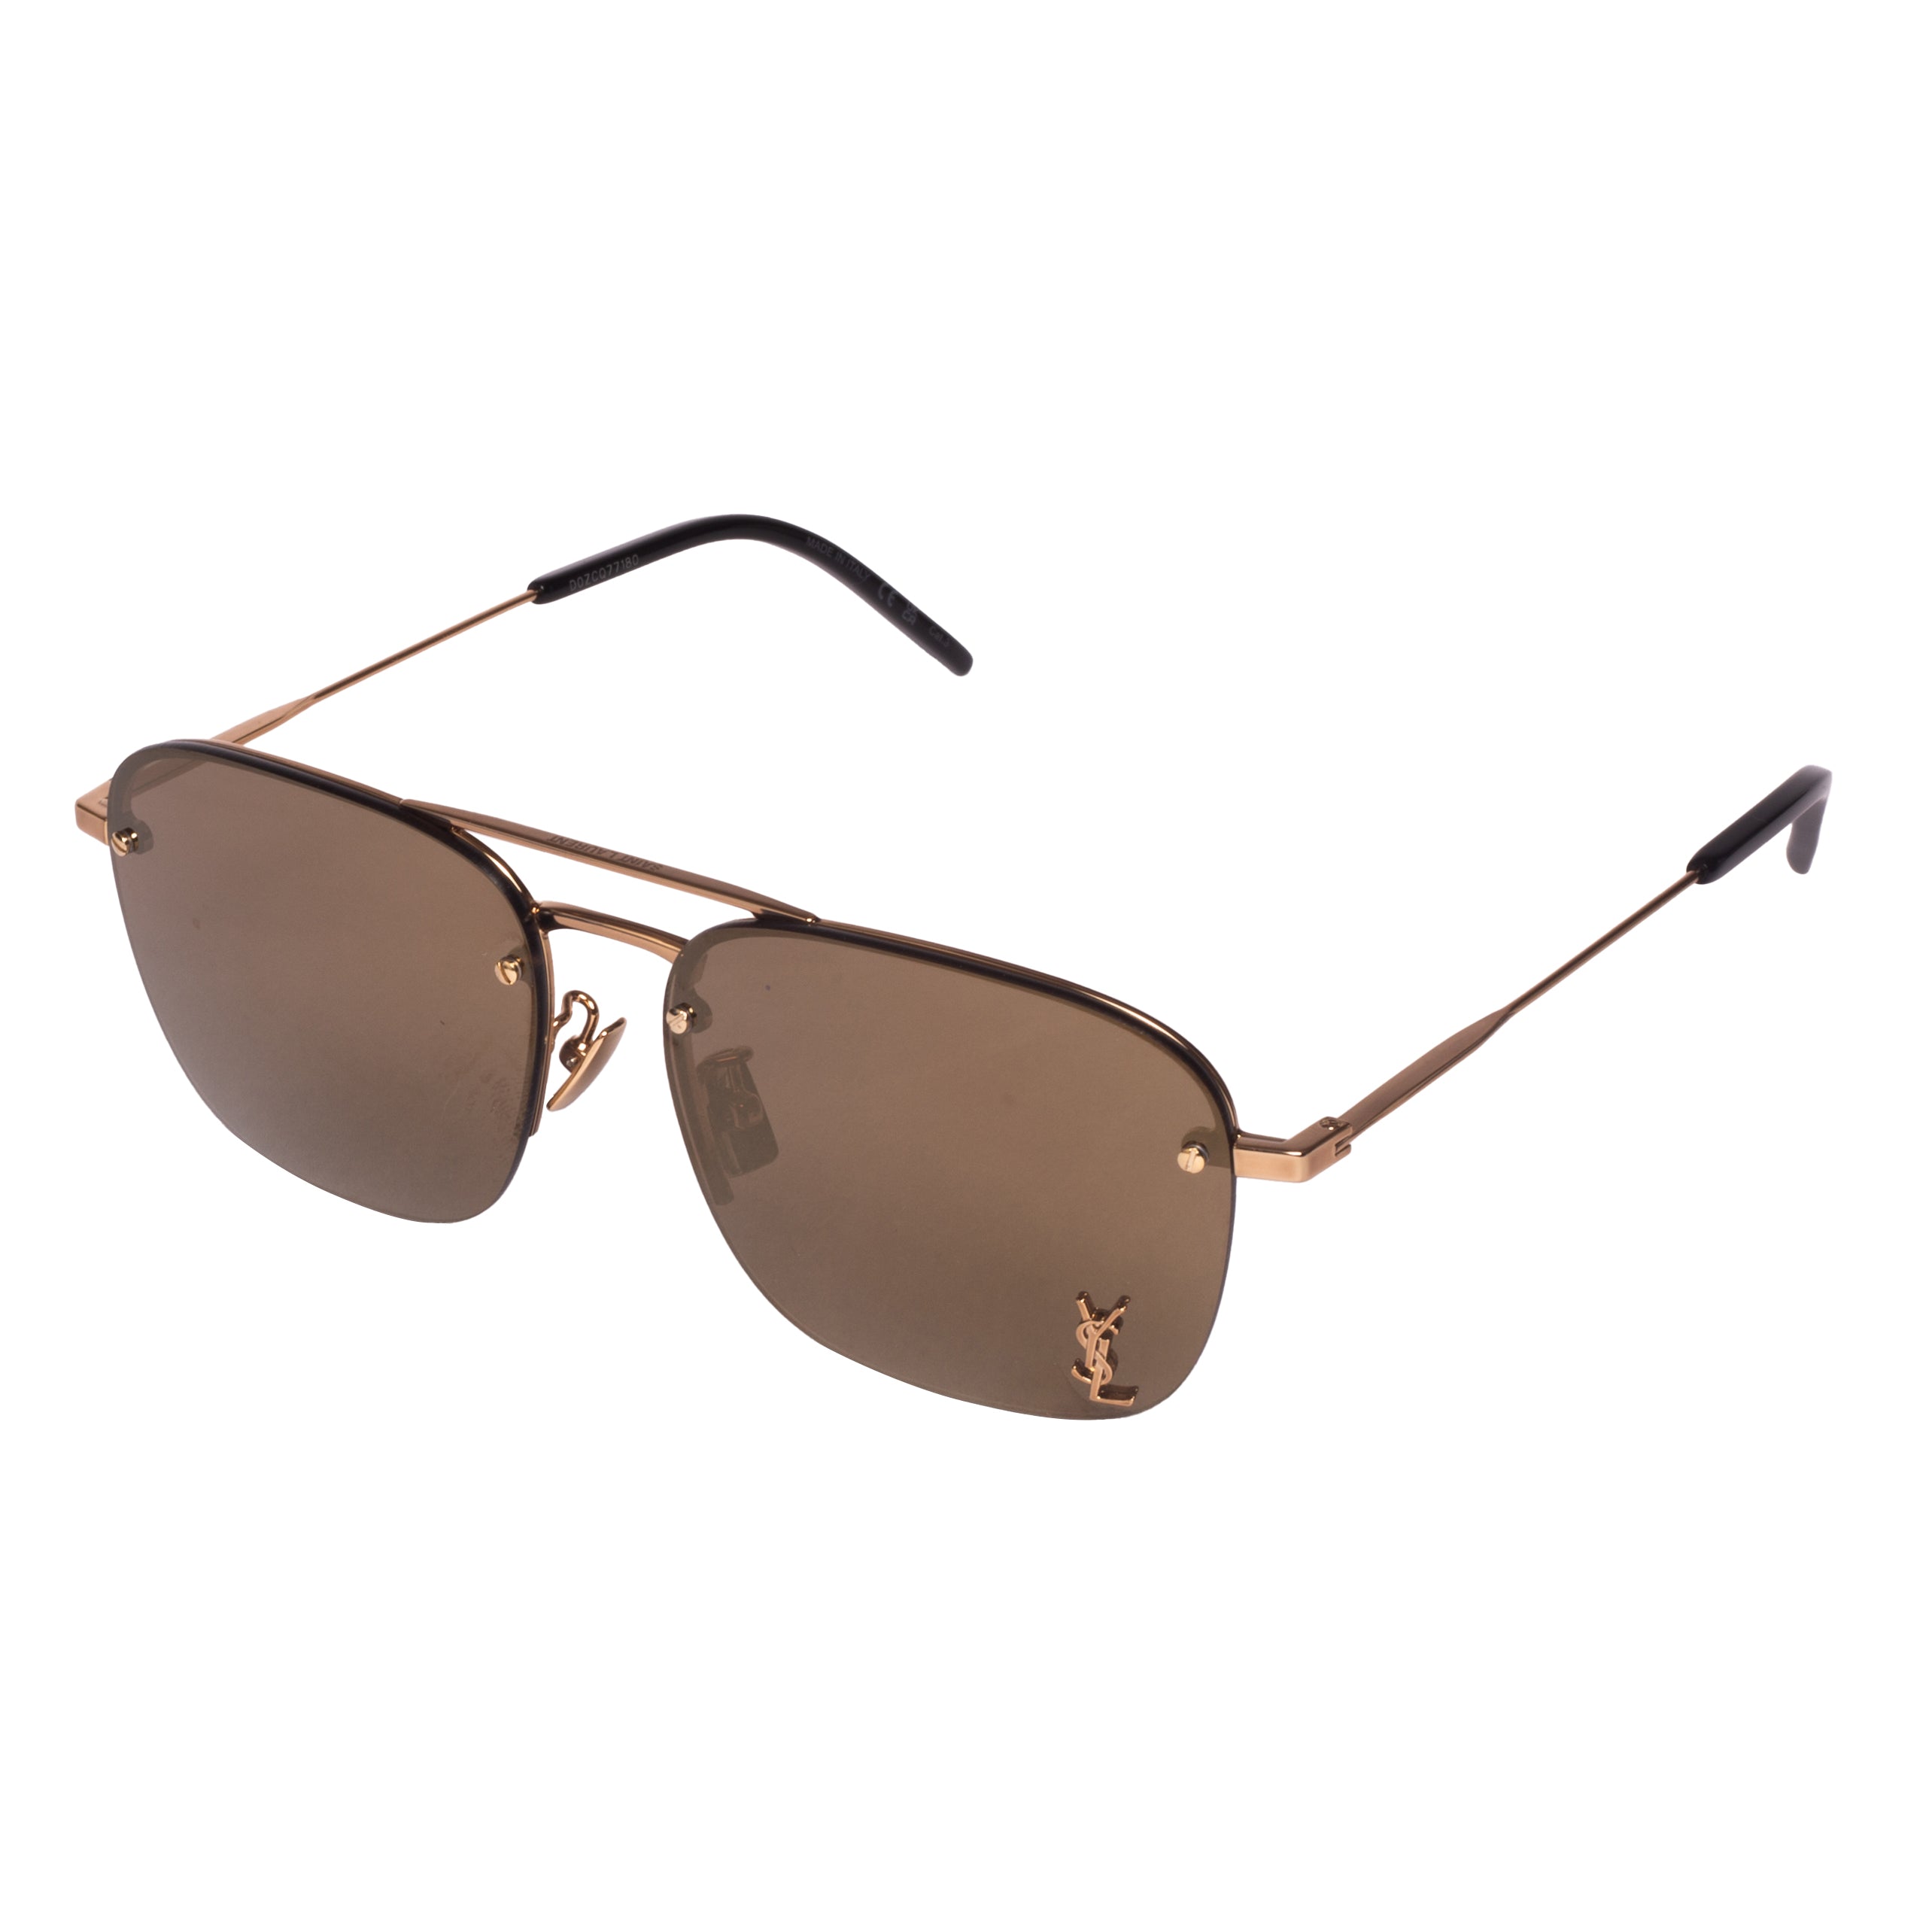 Saint Laurent-SL309-59-008 Sunglasses - Premium Sunglasses from Saint Laurent - Just Rs. 27900! Shop now at Laxmi Opticians